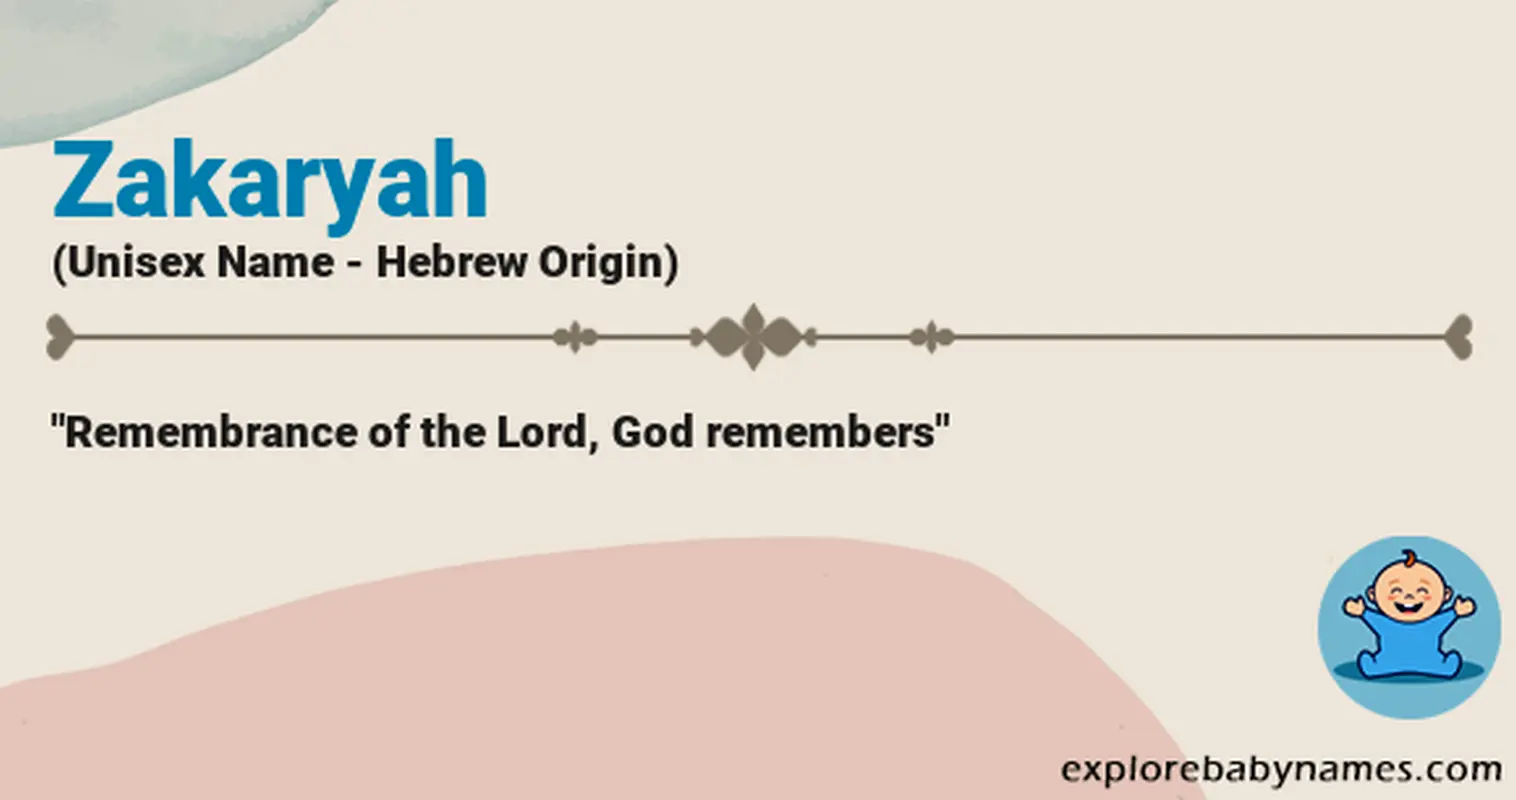 Meaning of Zakaryah